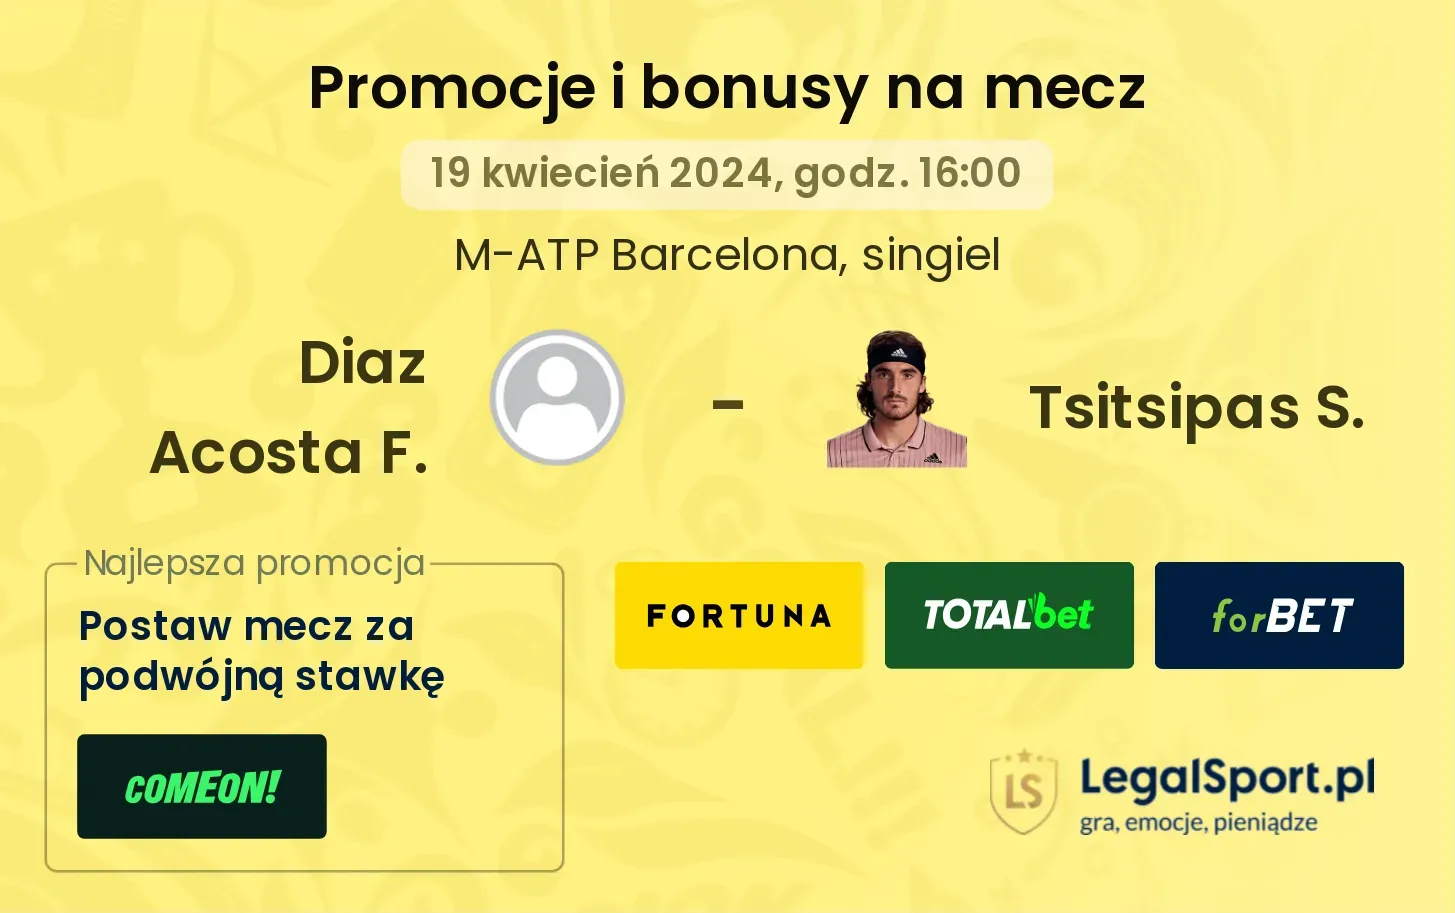 Diaz Acosta F. - Tsitsipas S. promocje bonusy na mecz